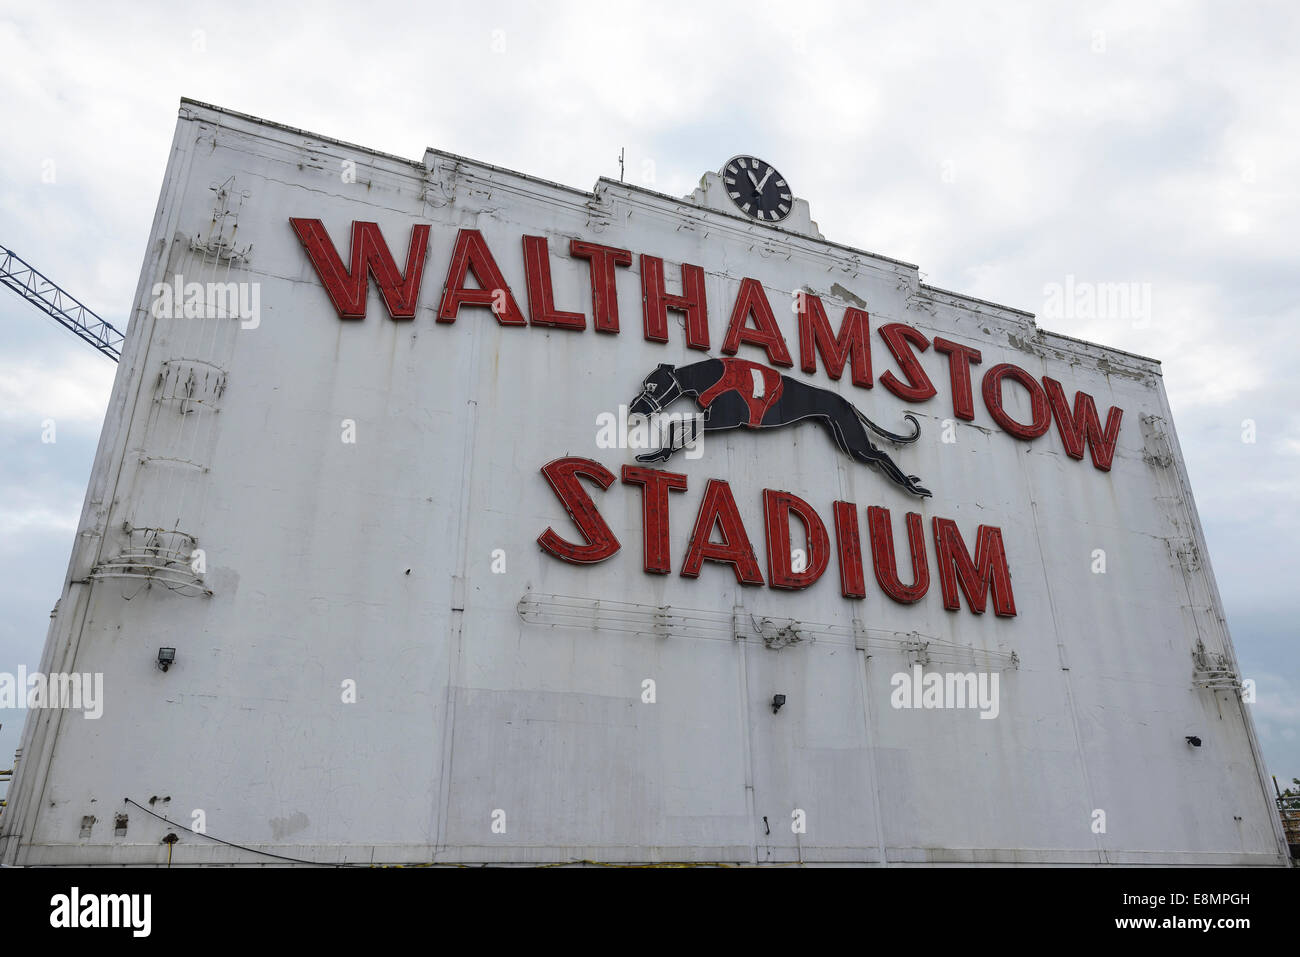 Le Grade II Walthamstow Stadium Tote building Banque D'Images